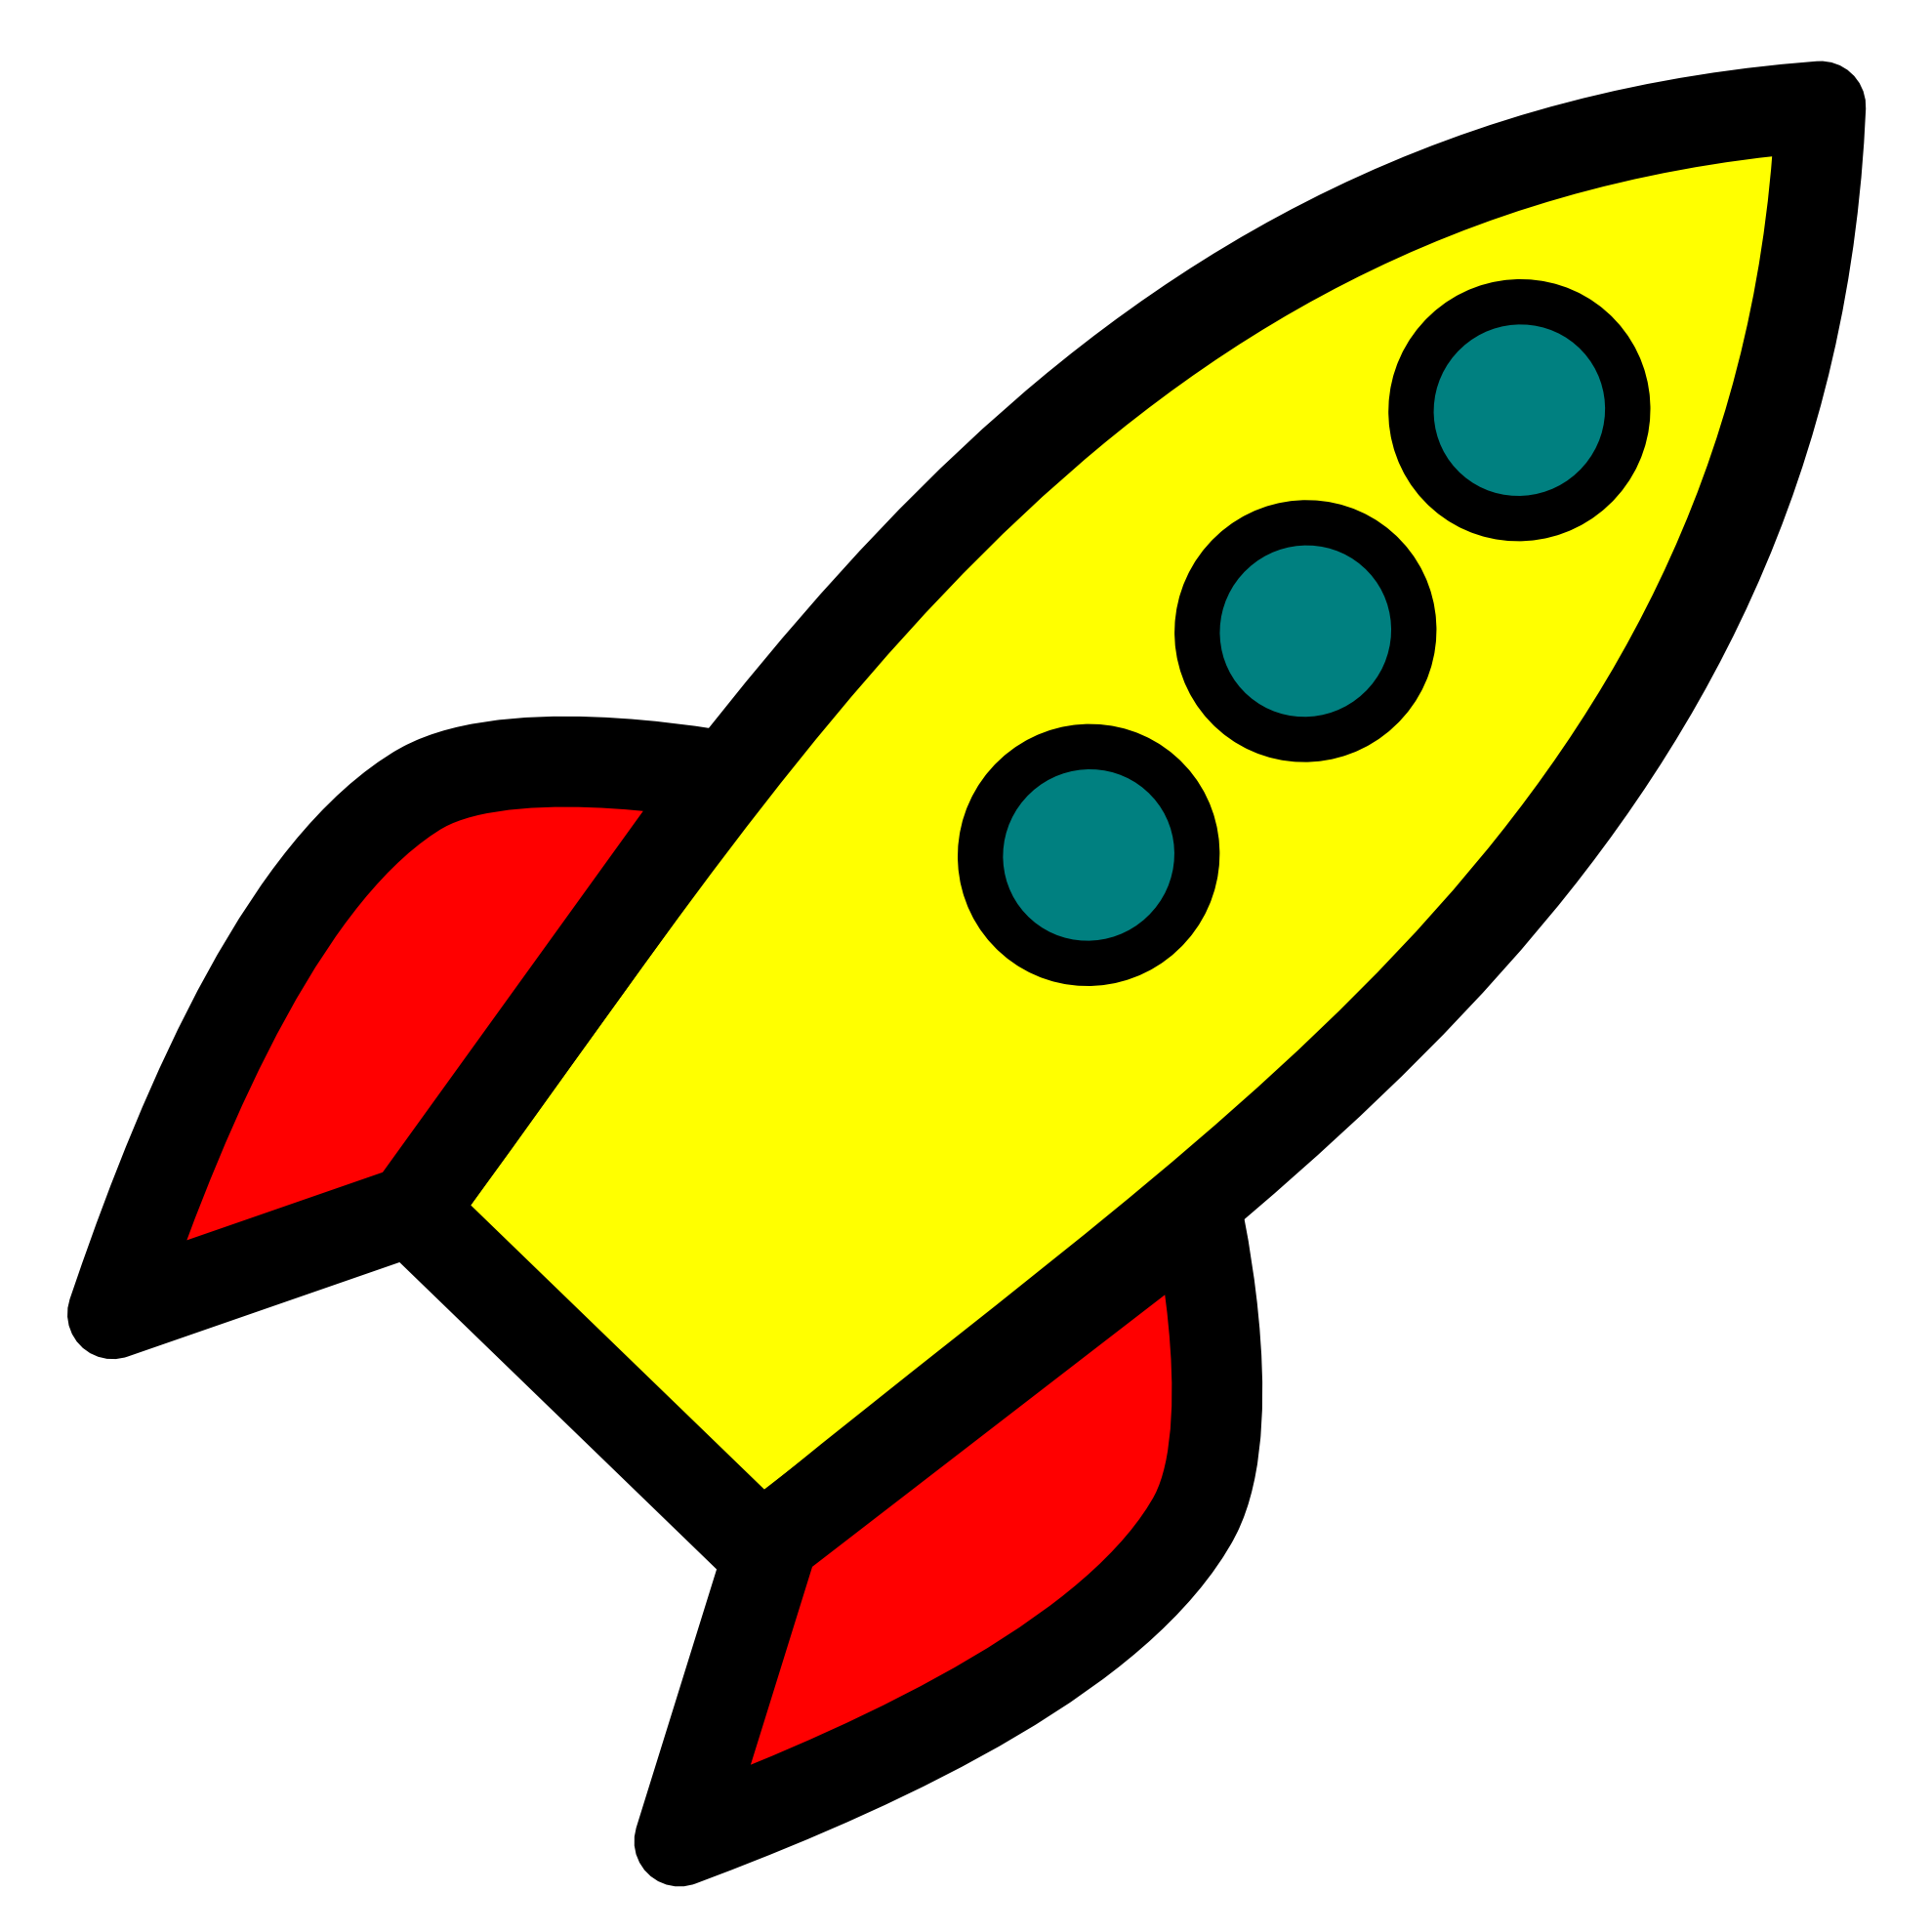 Rocket clip art clipart image